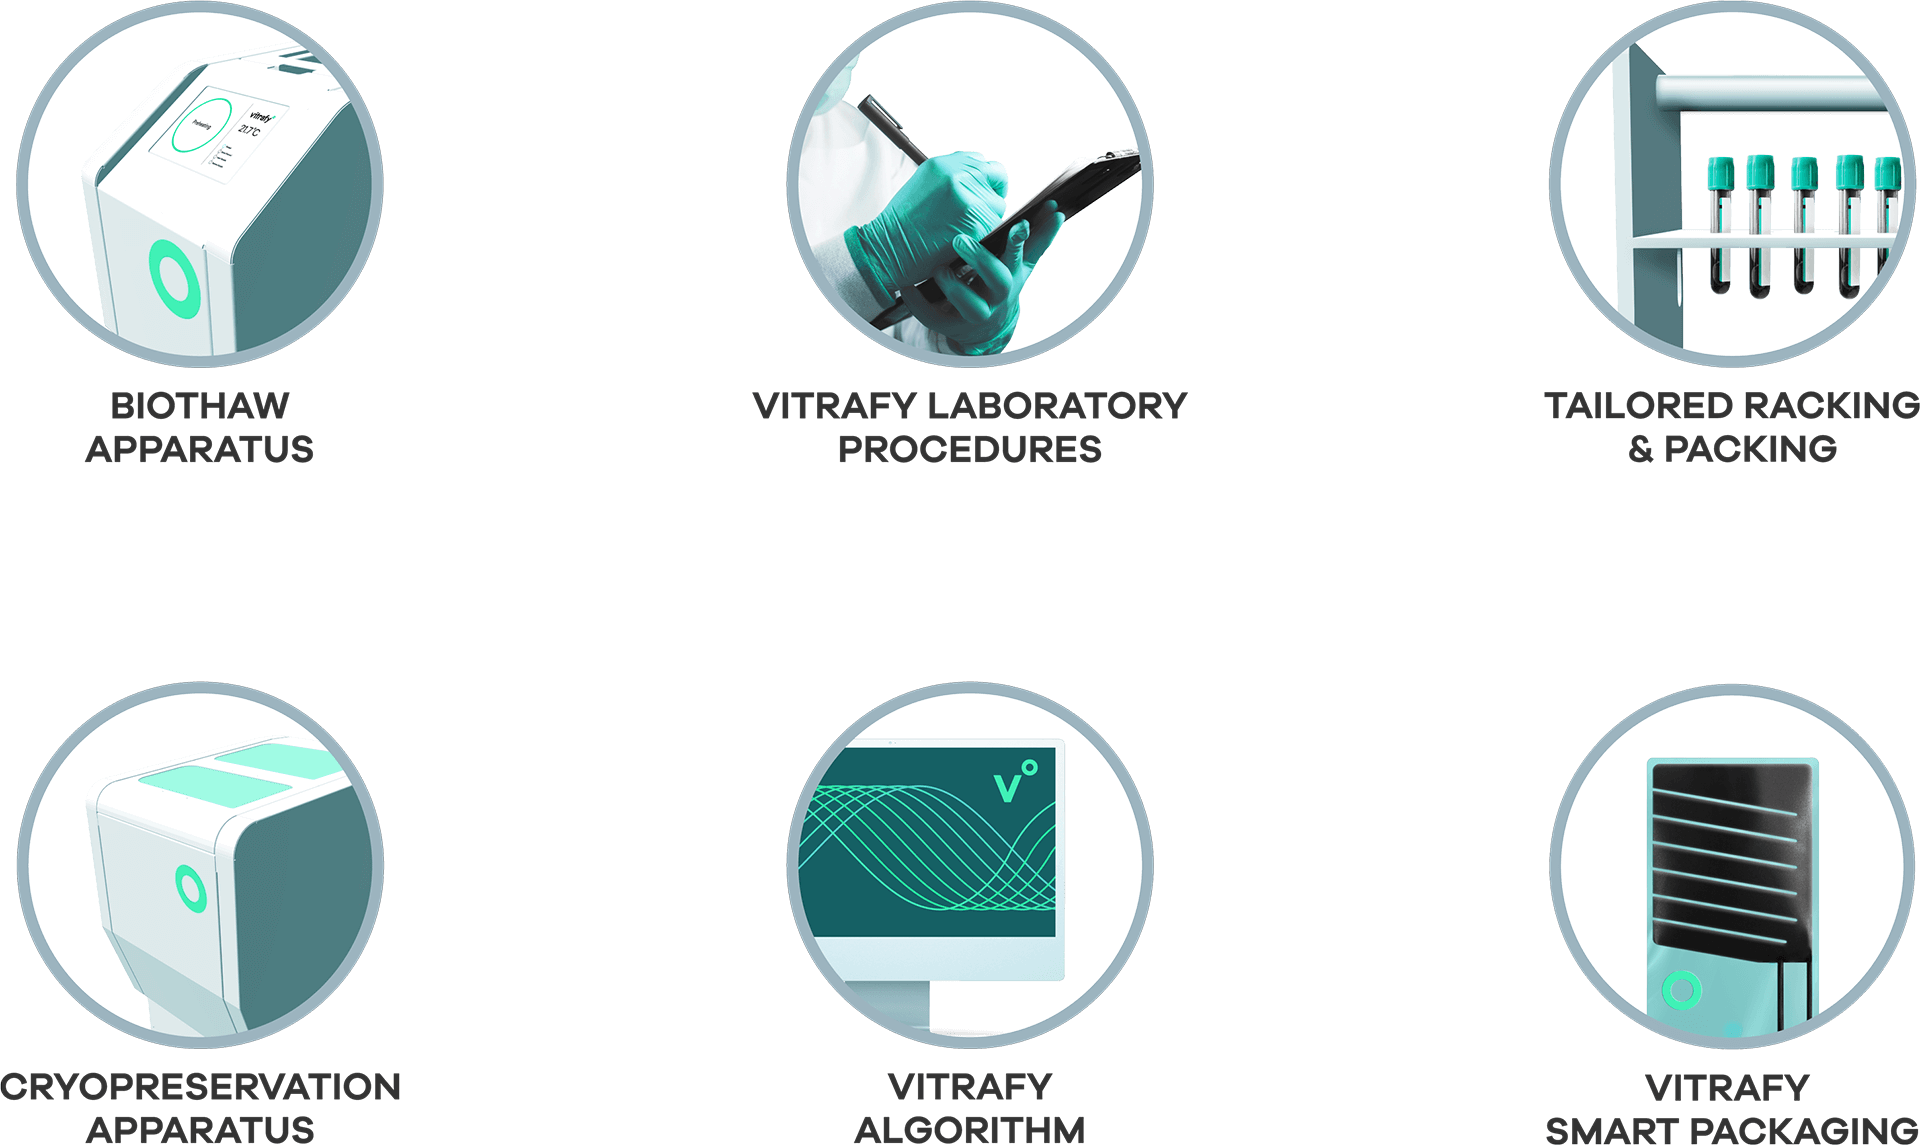 vitrafy - Cryopreservation technology products.